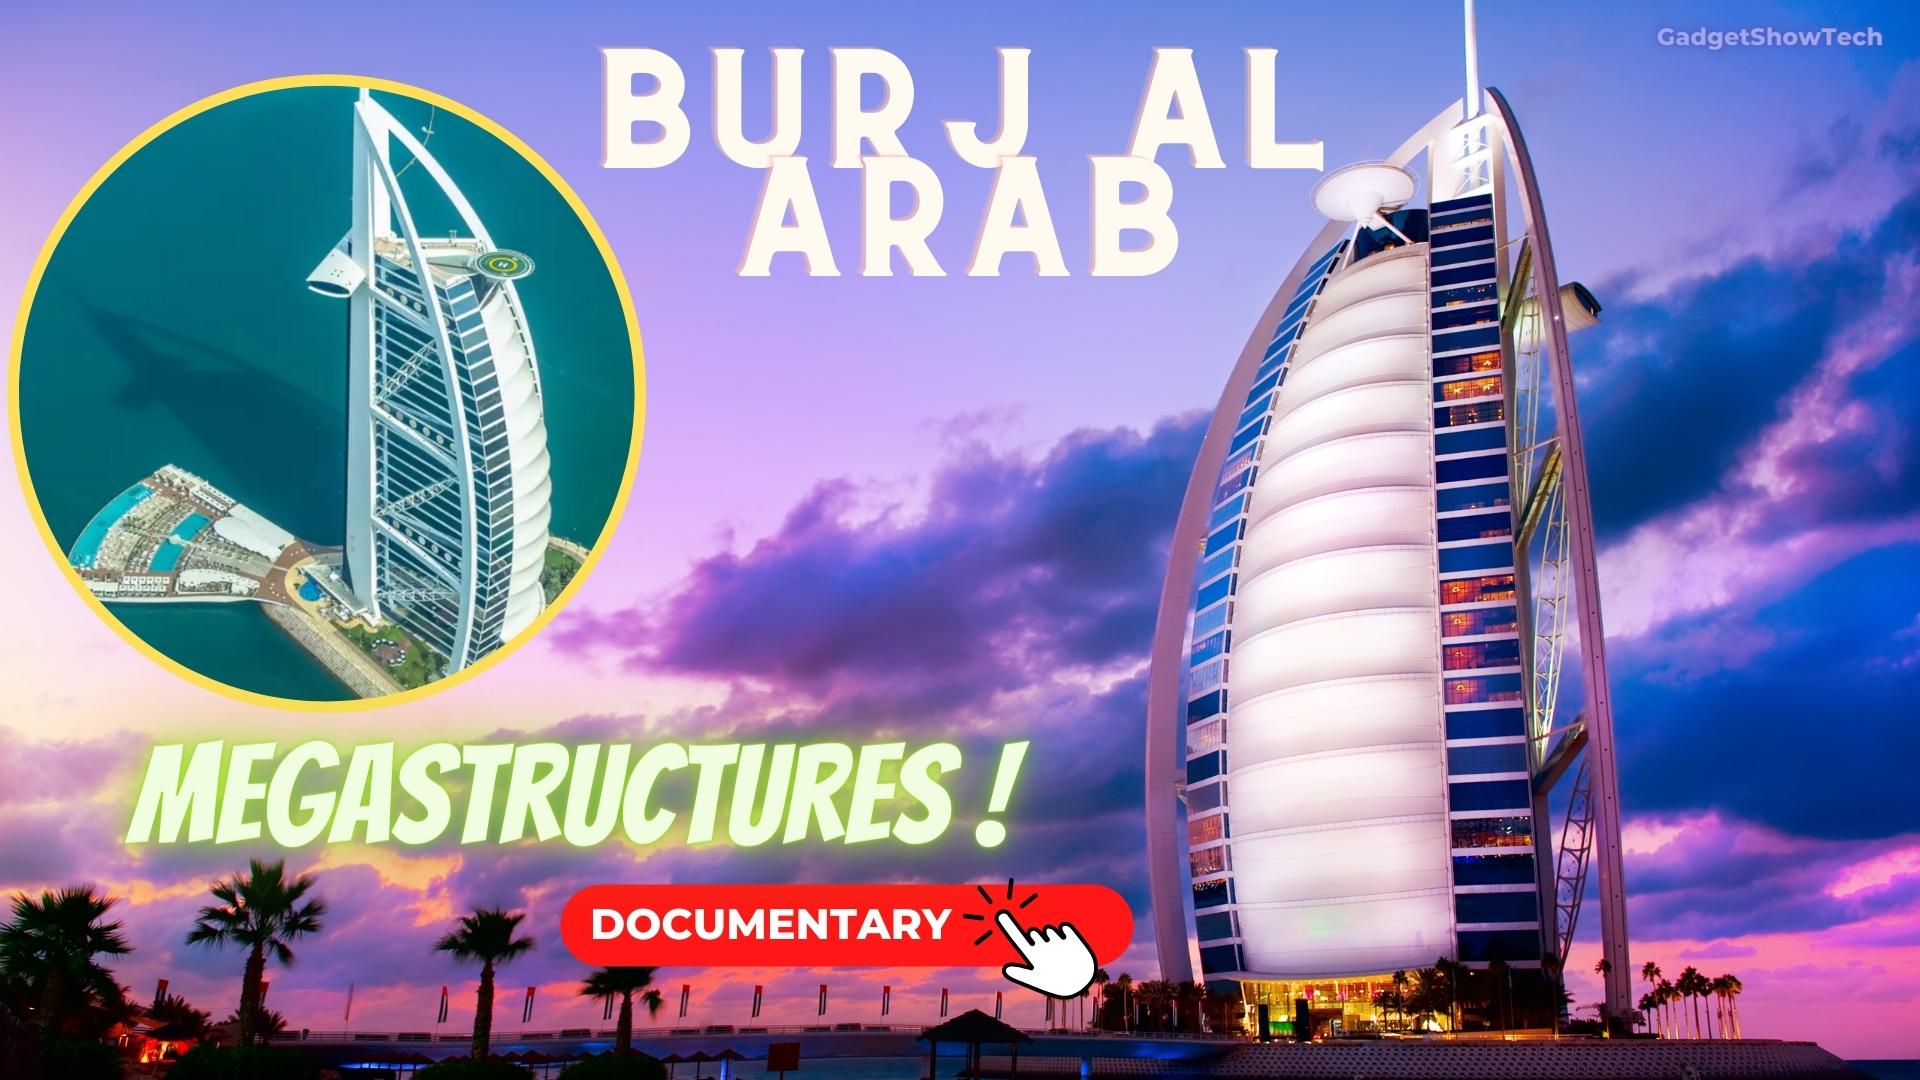 Making the Billion Dollar Hotel Burj Al Arab 7 star megastructures Dubai